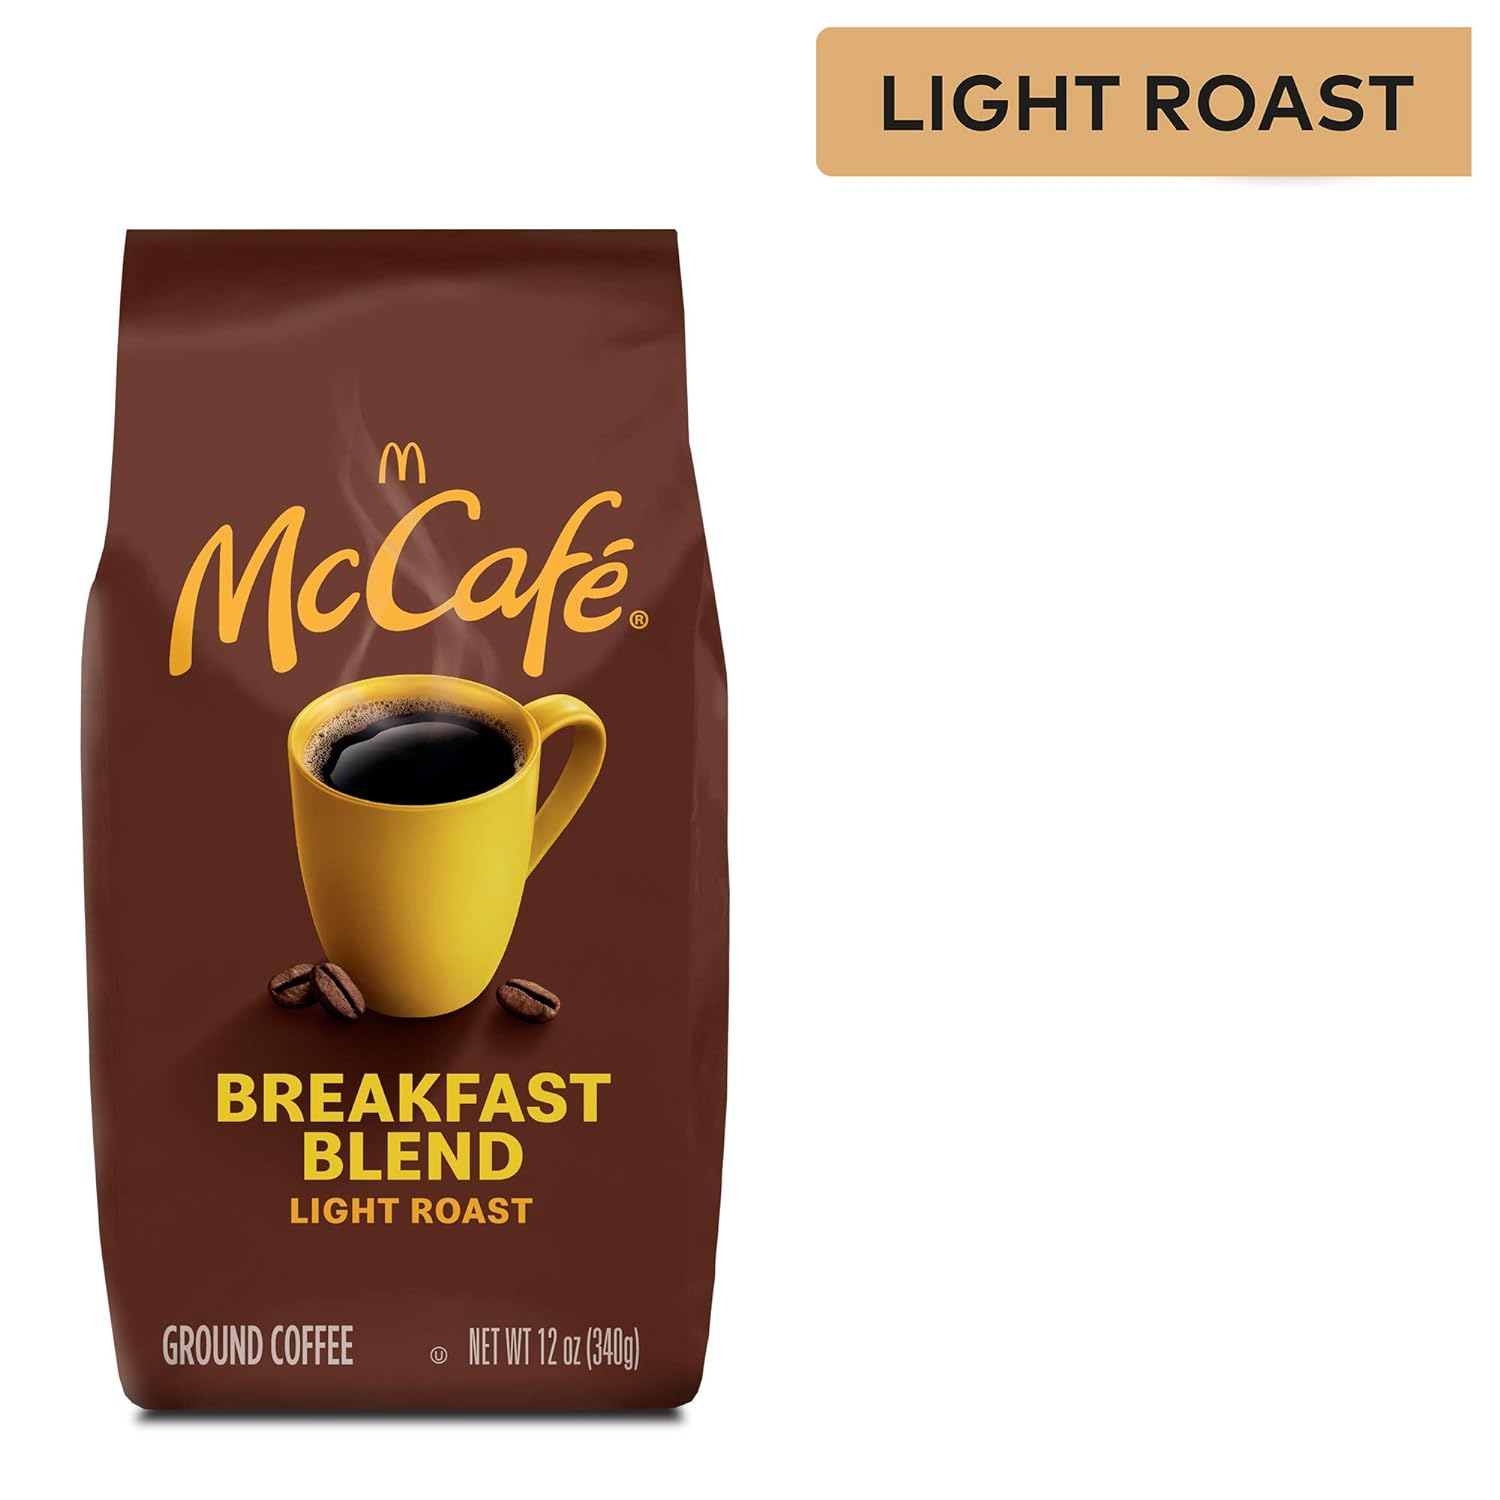 McCafe Breakfast Blend, Light Roast Ground Coffee, 12 oz Bag : Grocery & Gourmet Food